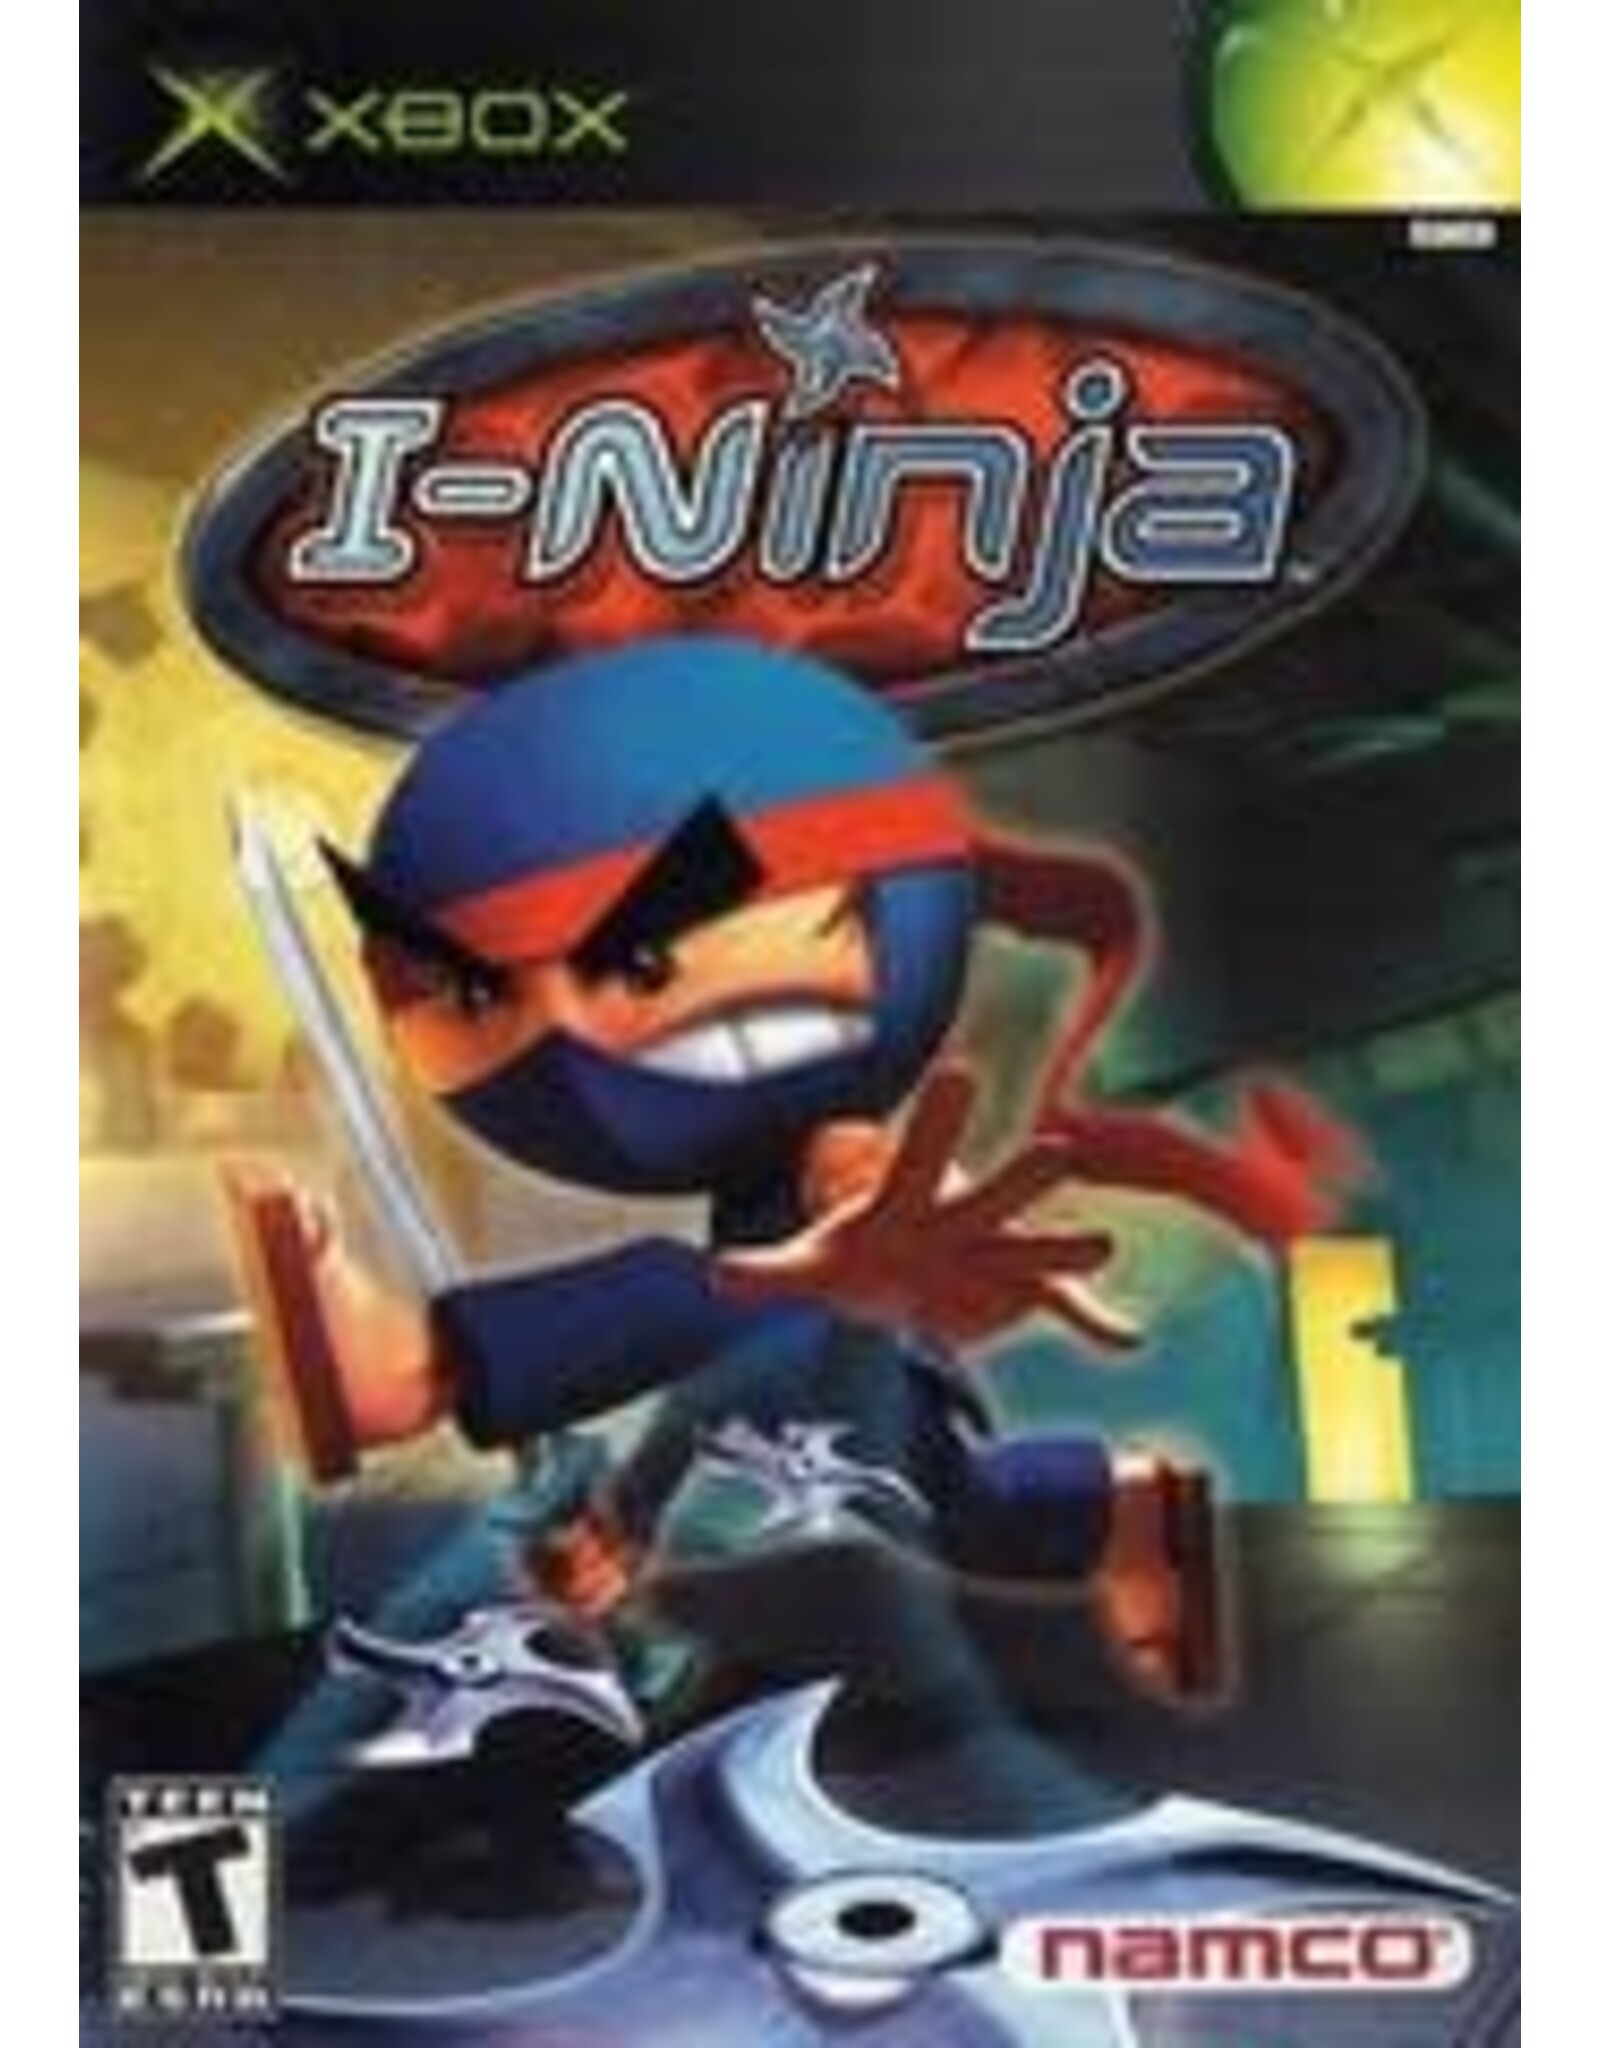 Xbox I-Ninja (No Manual, Writing on Disc)